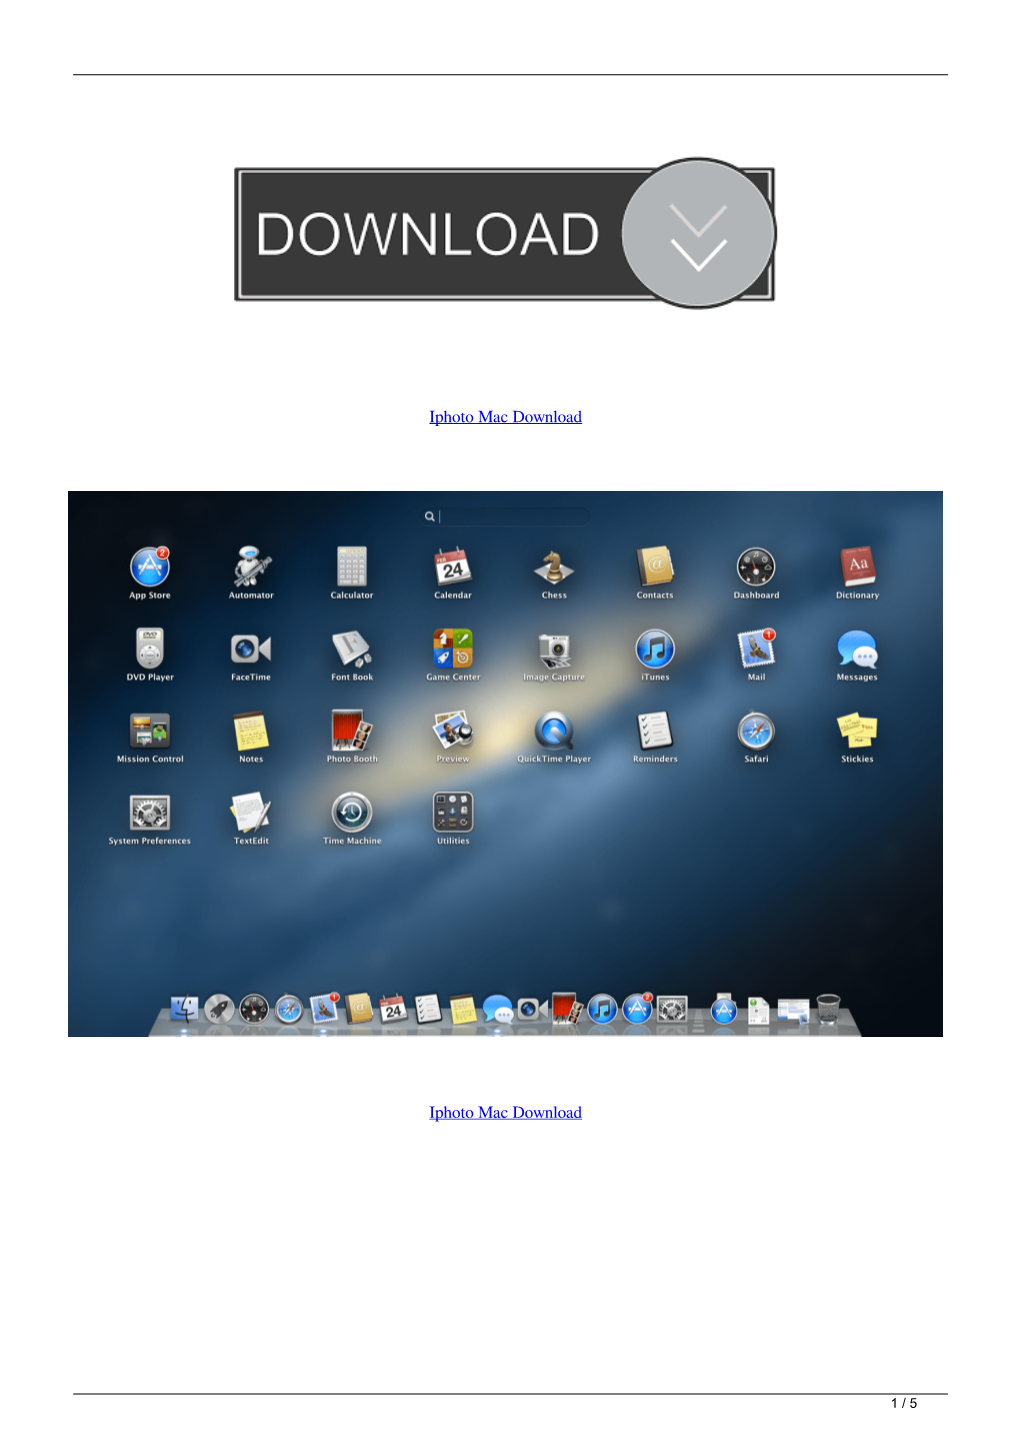 Iphoto Mac Download